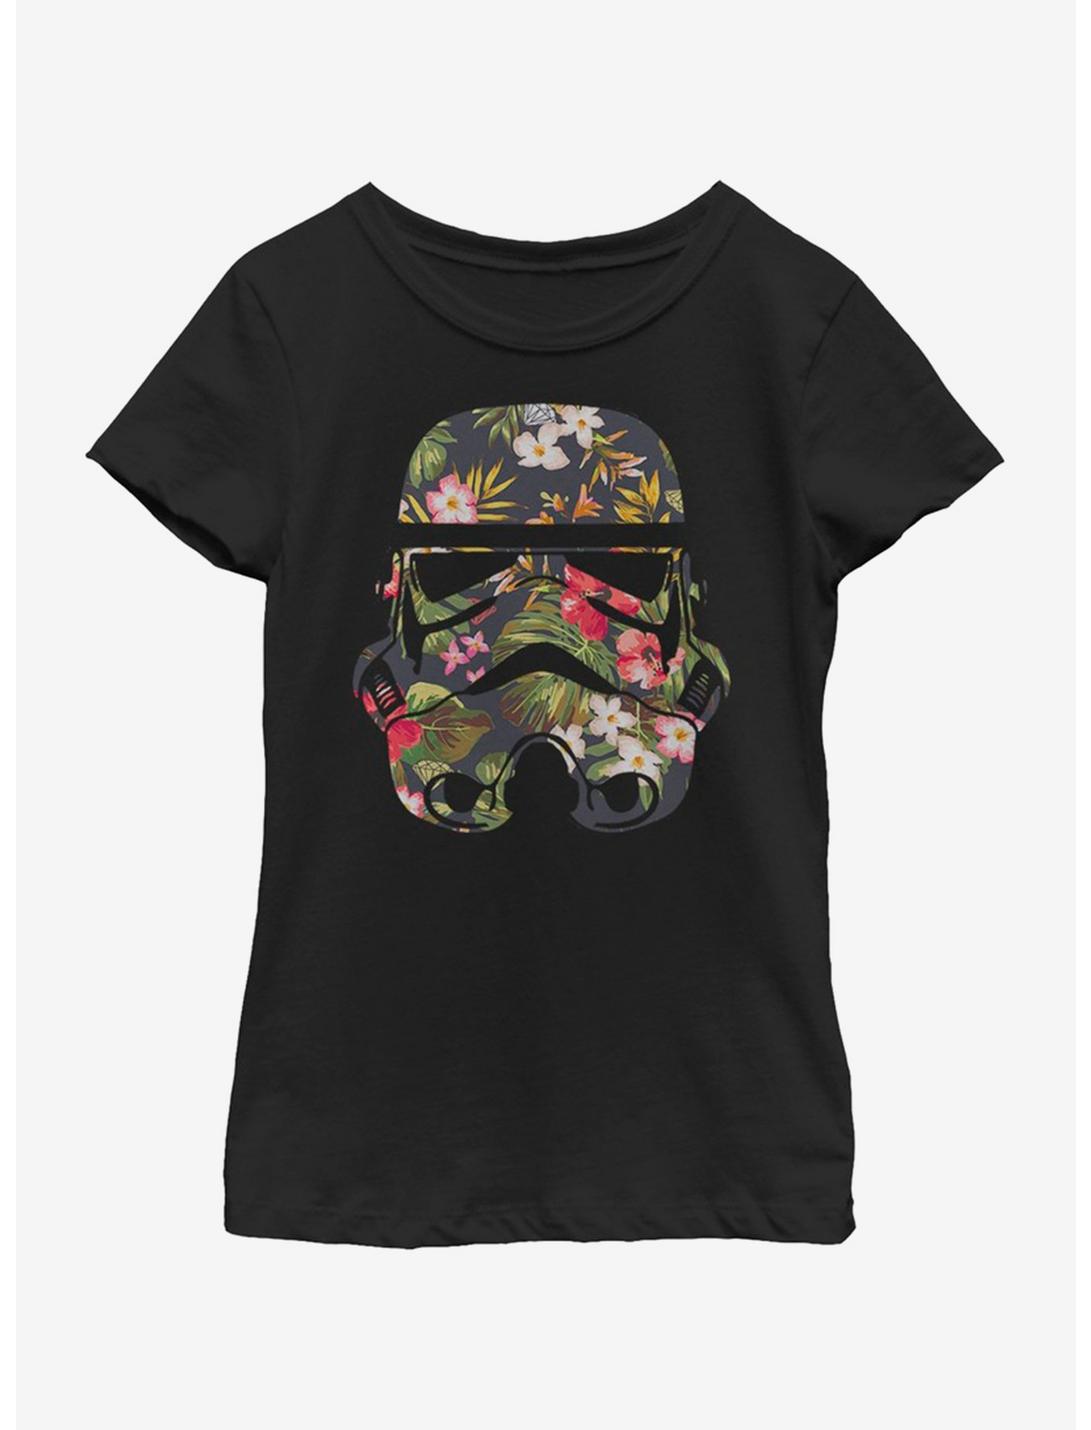 Star Wars Storm Flower Youth Girls T-Shirt, BLACK, hi-res